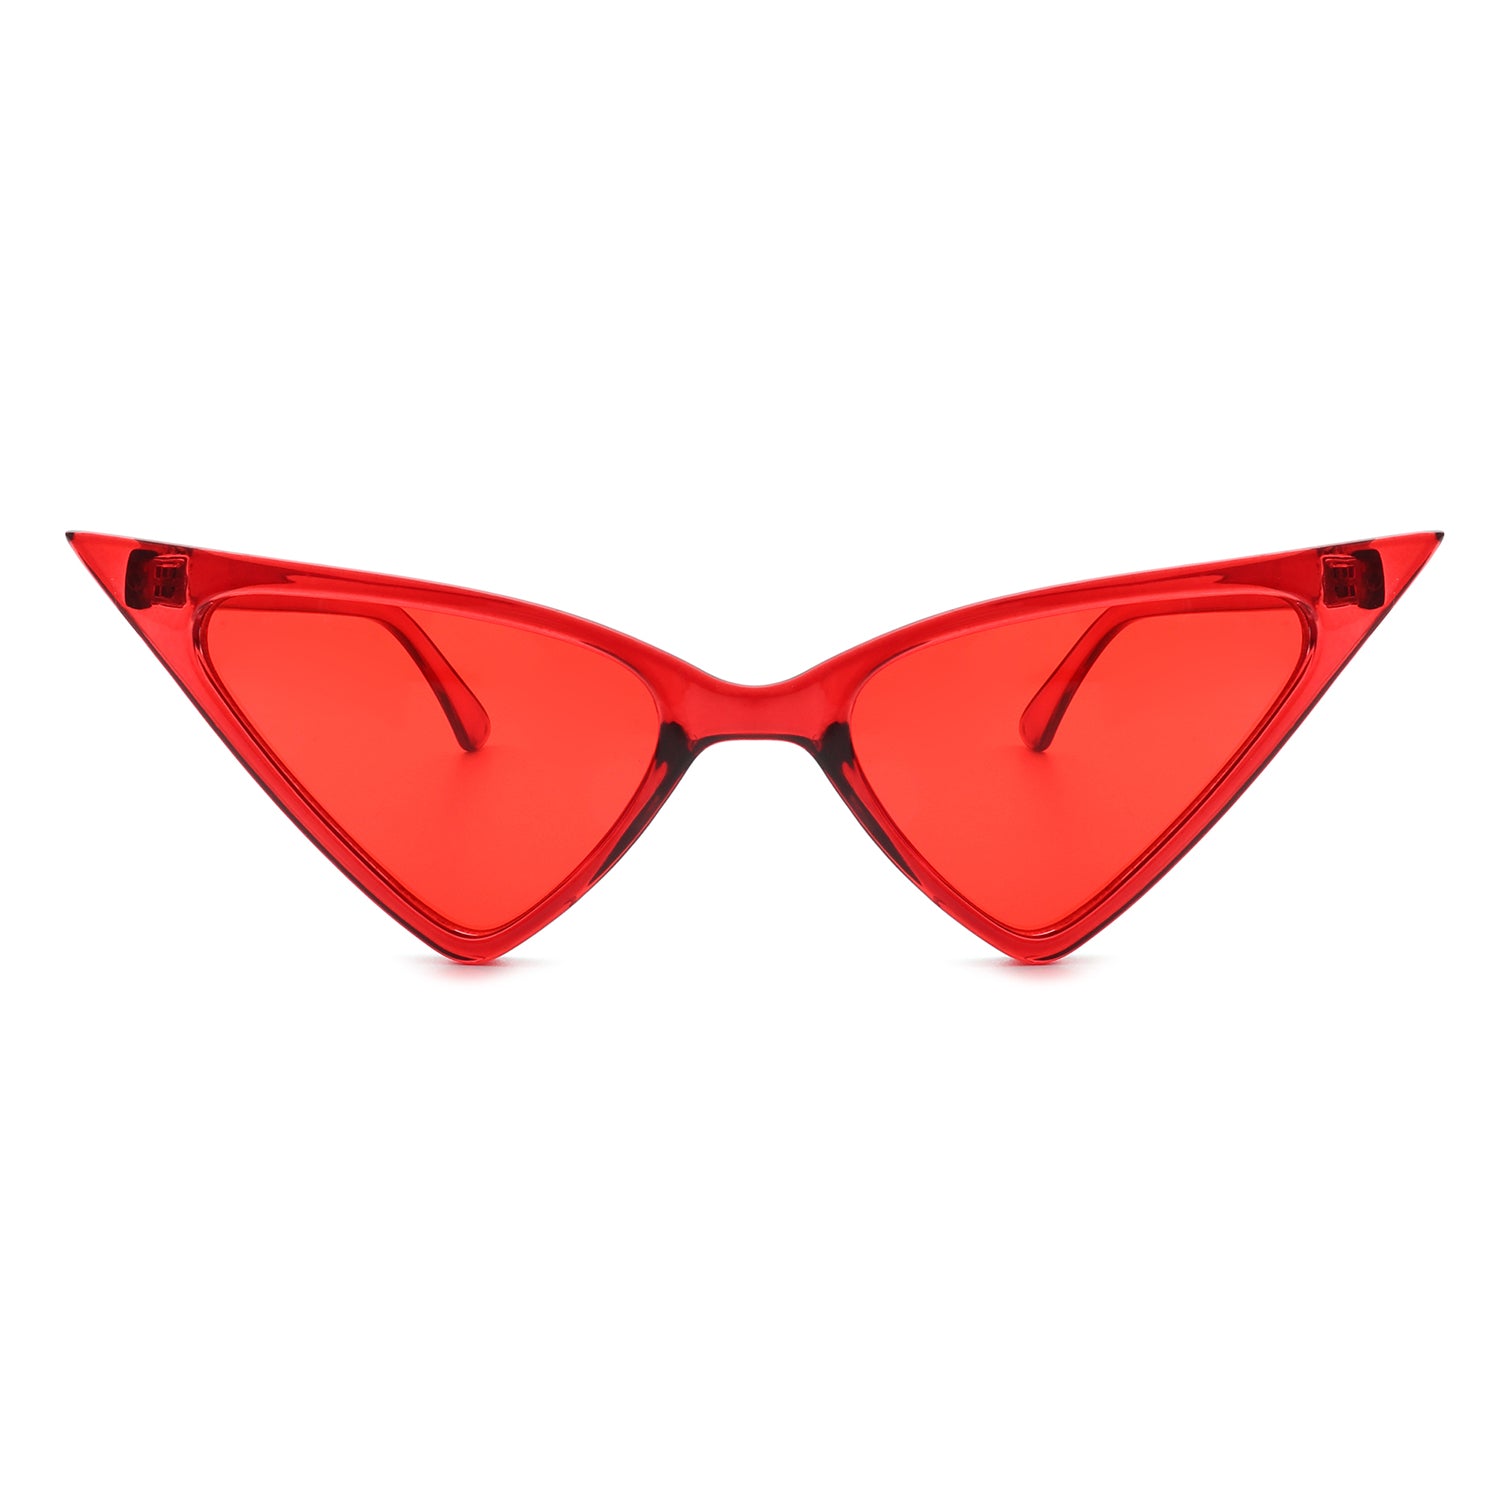 S1179 - Vintage Triangle High Pointed Cat Eye Retro Fashion Sunglasses